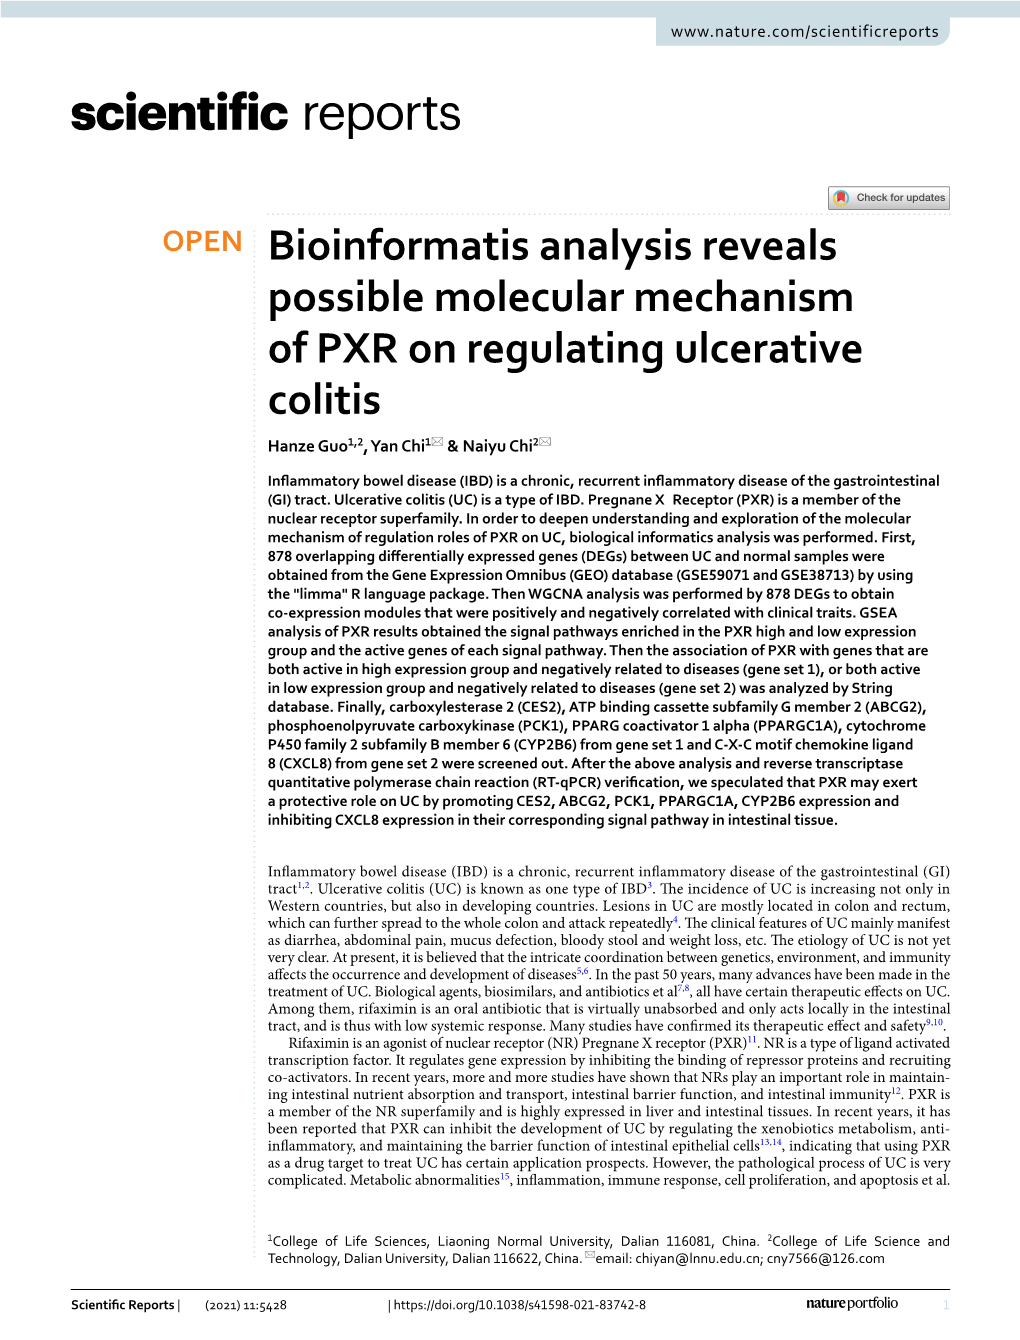 Bioinformatis Analysis Reveals Possible Molecular Mechanism of PXR on Regulating Ulcerative Colitis Hanze Guo1,2, Yan Chi1* & Naiyu Chi2*